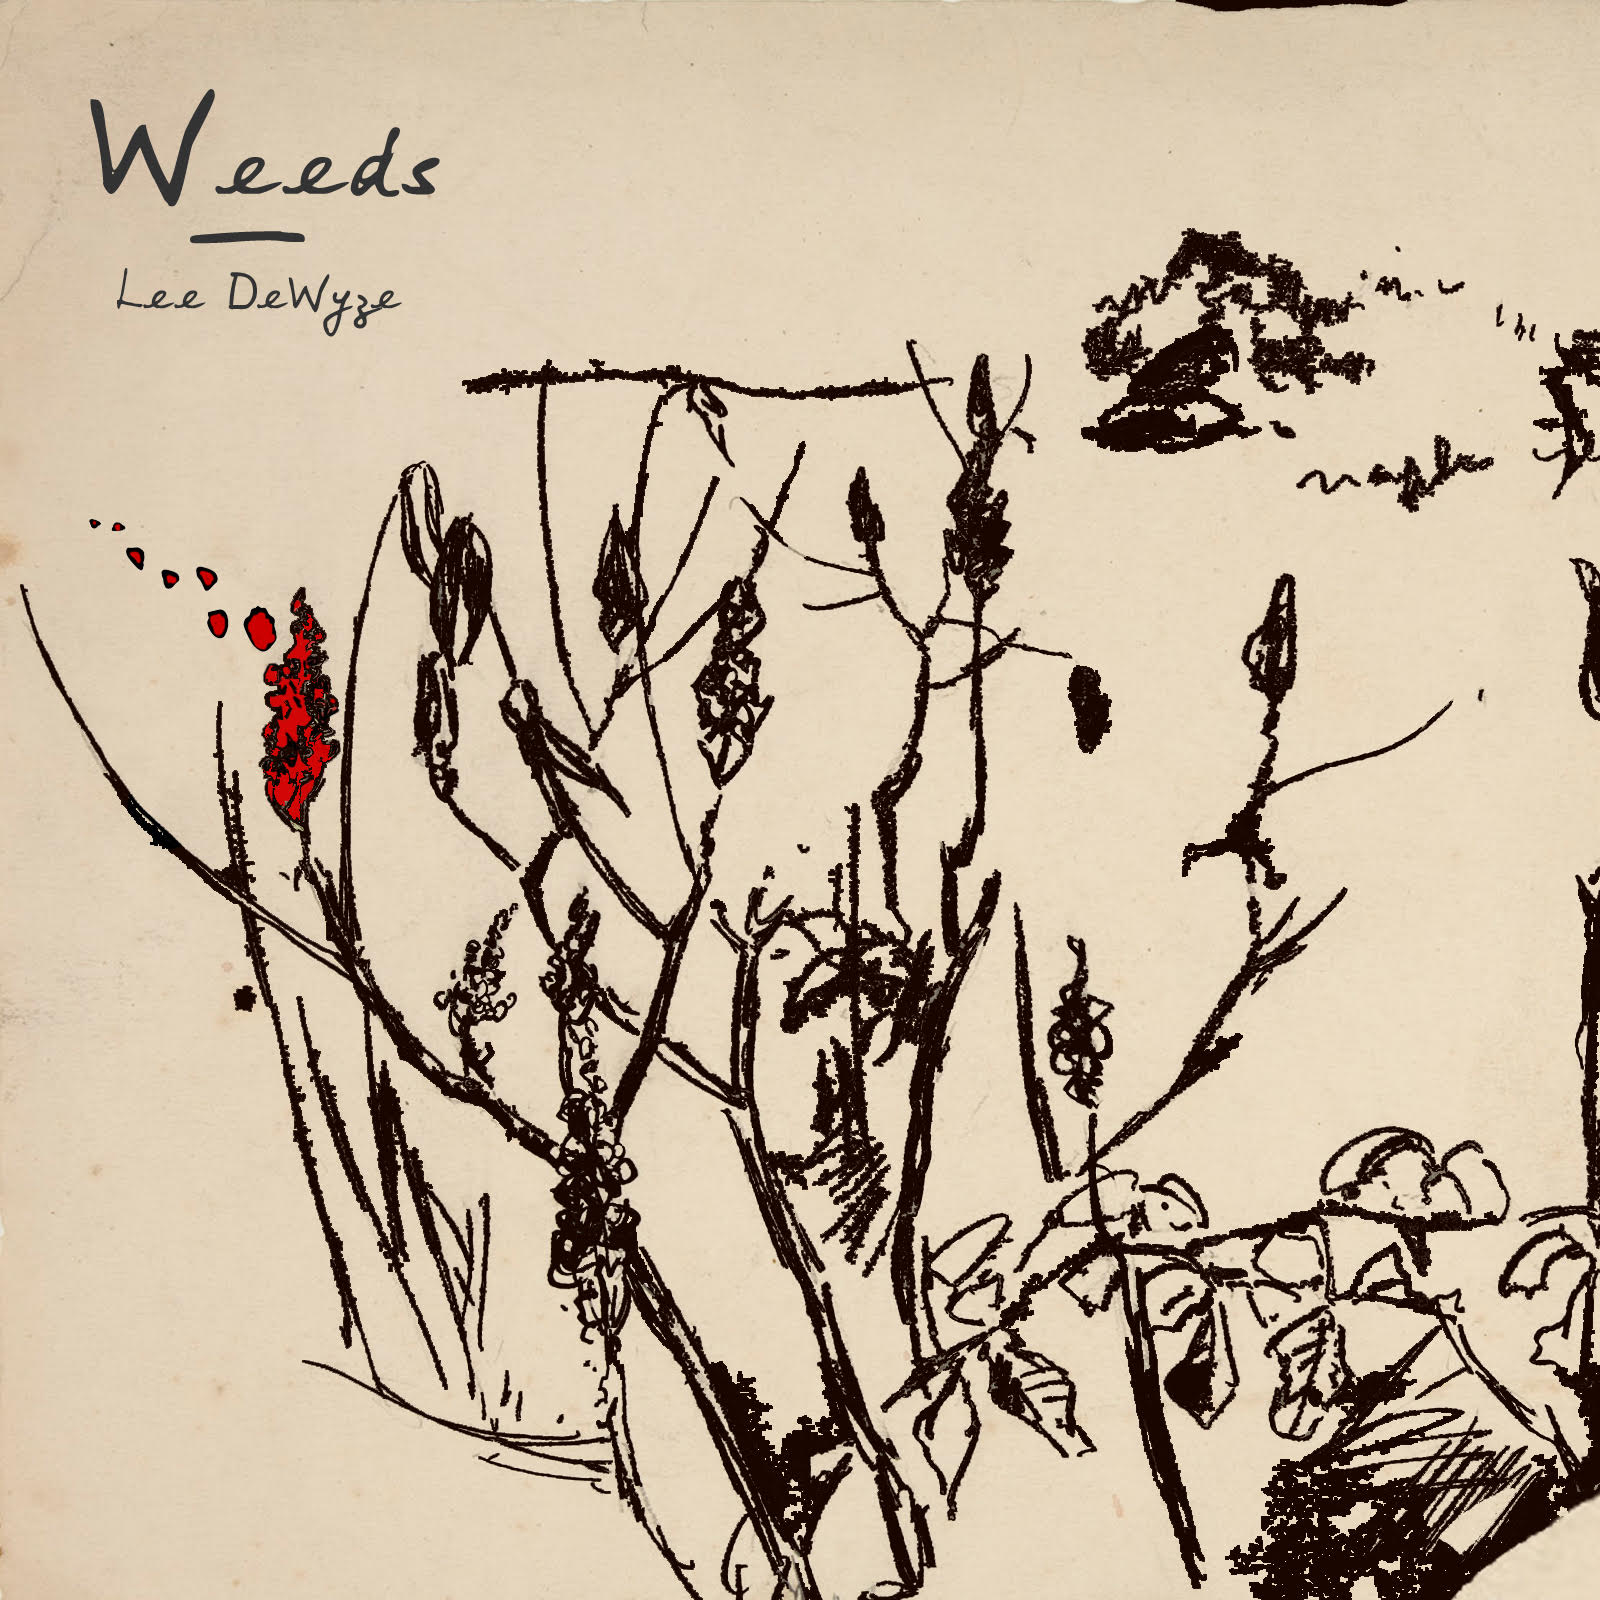 Lee DeWyze - Weeds